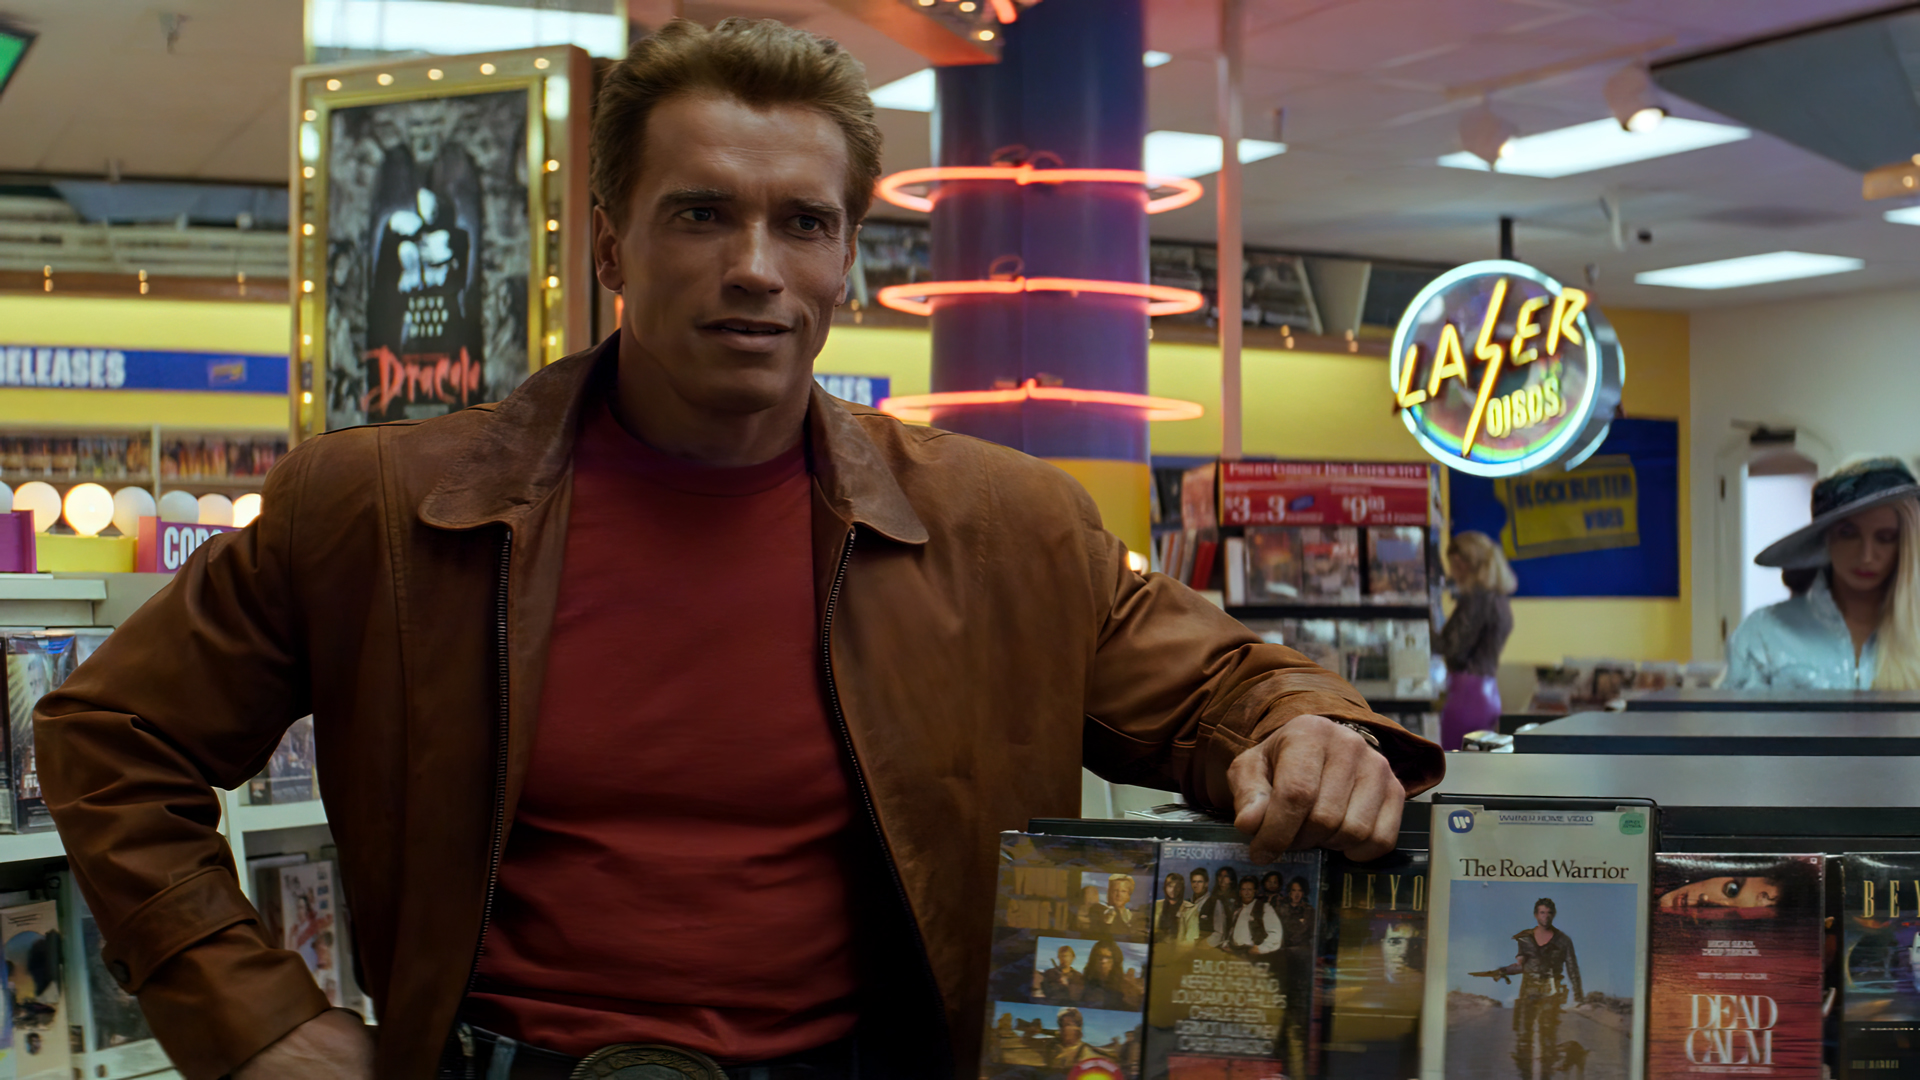 People 1920x1080 Last Action Hero movies film stills Arnold Schwarzenegger actor jacket movie poster shelves stores